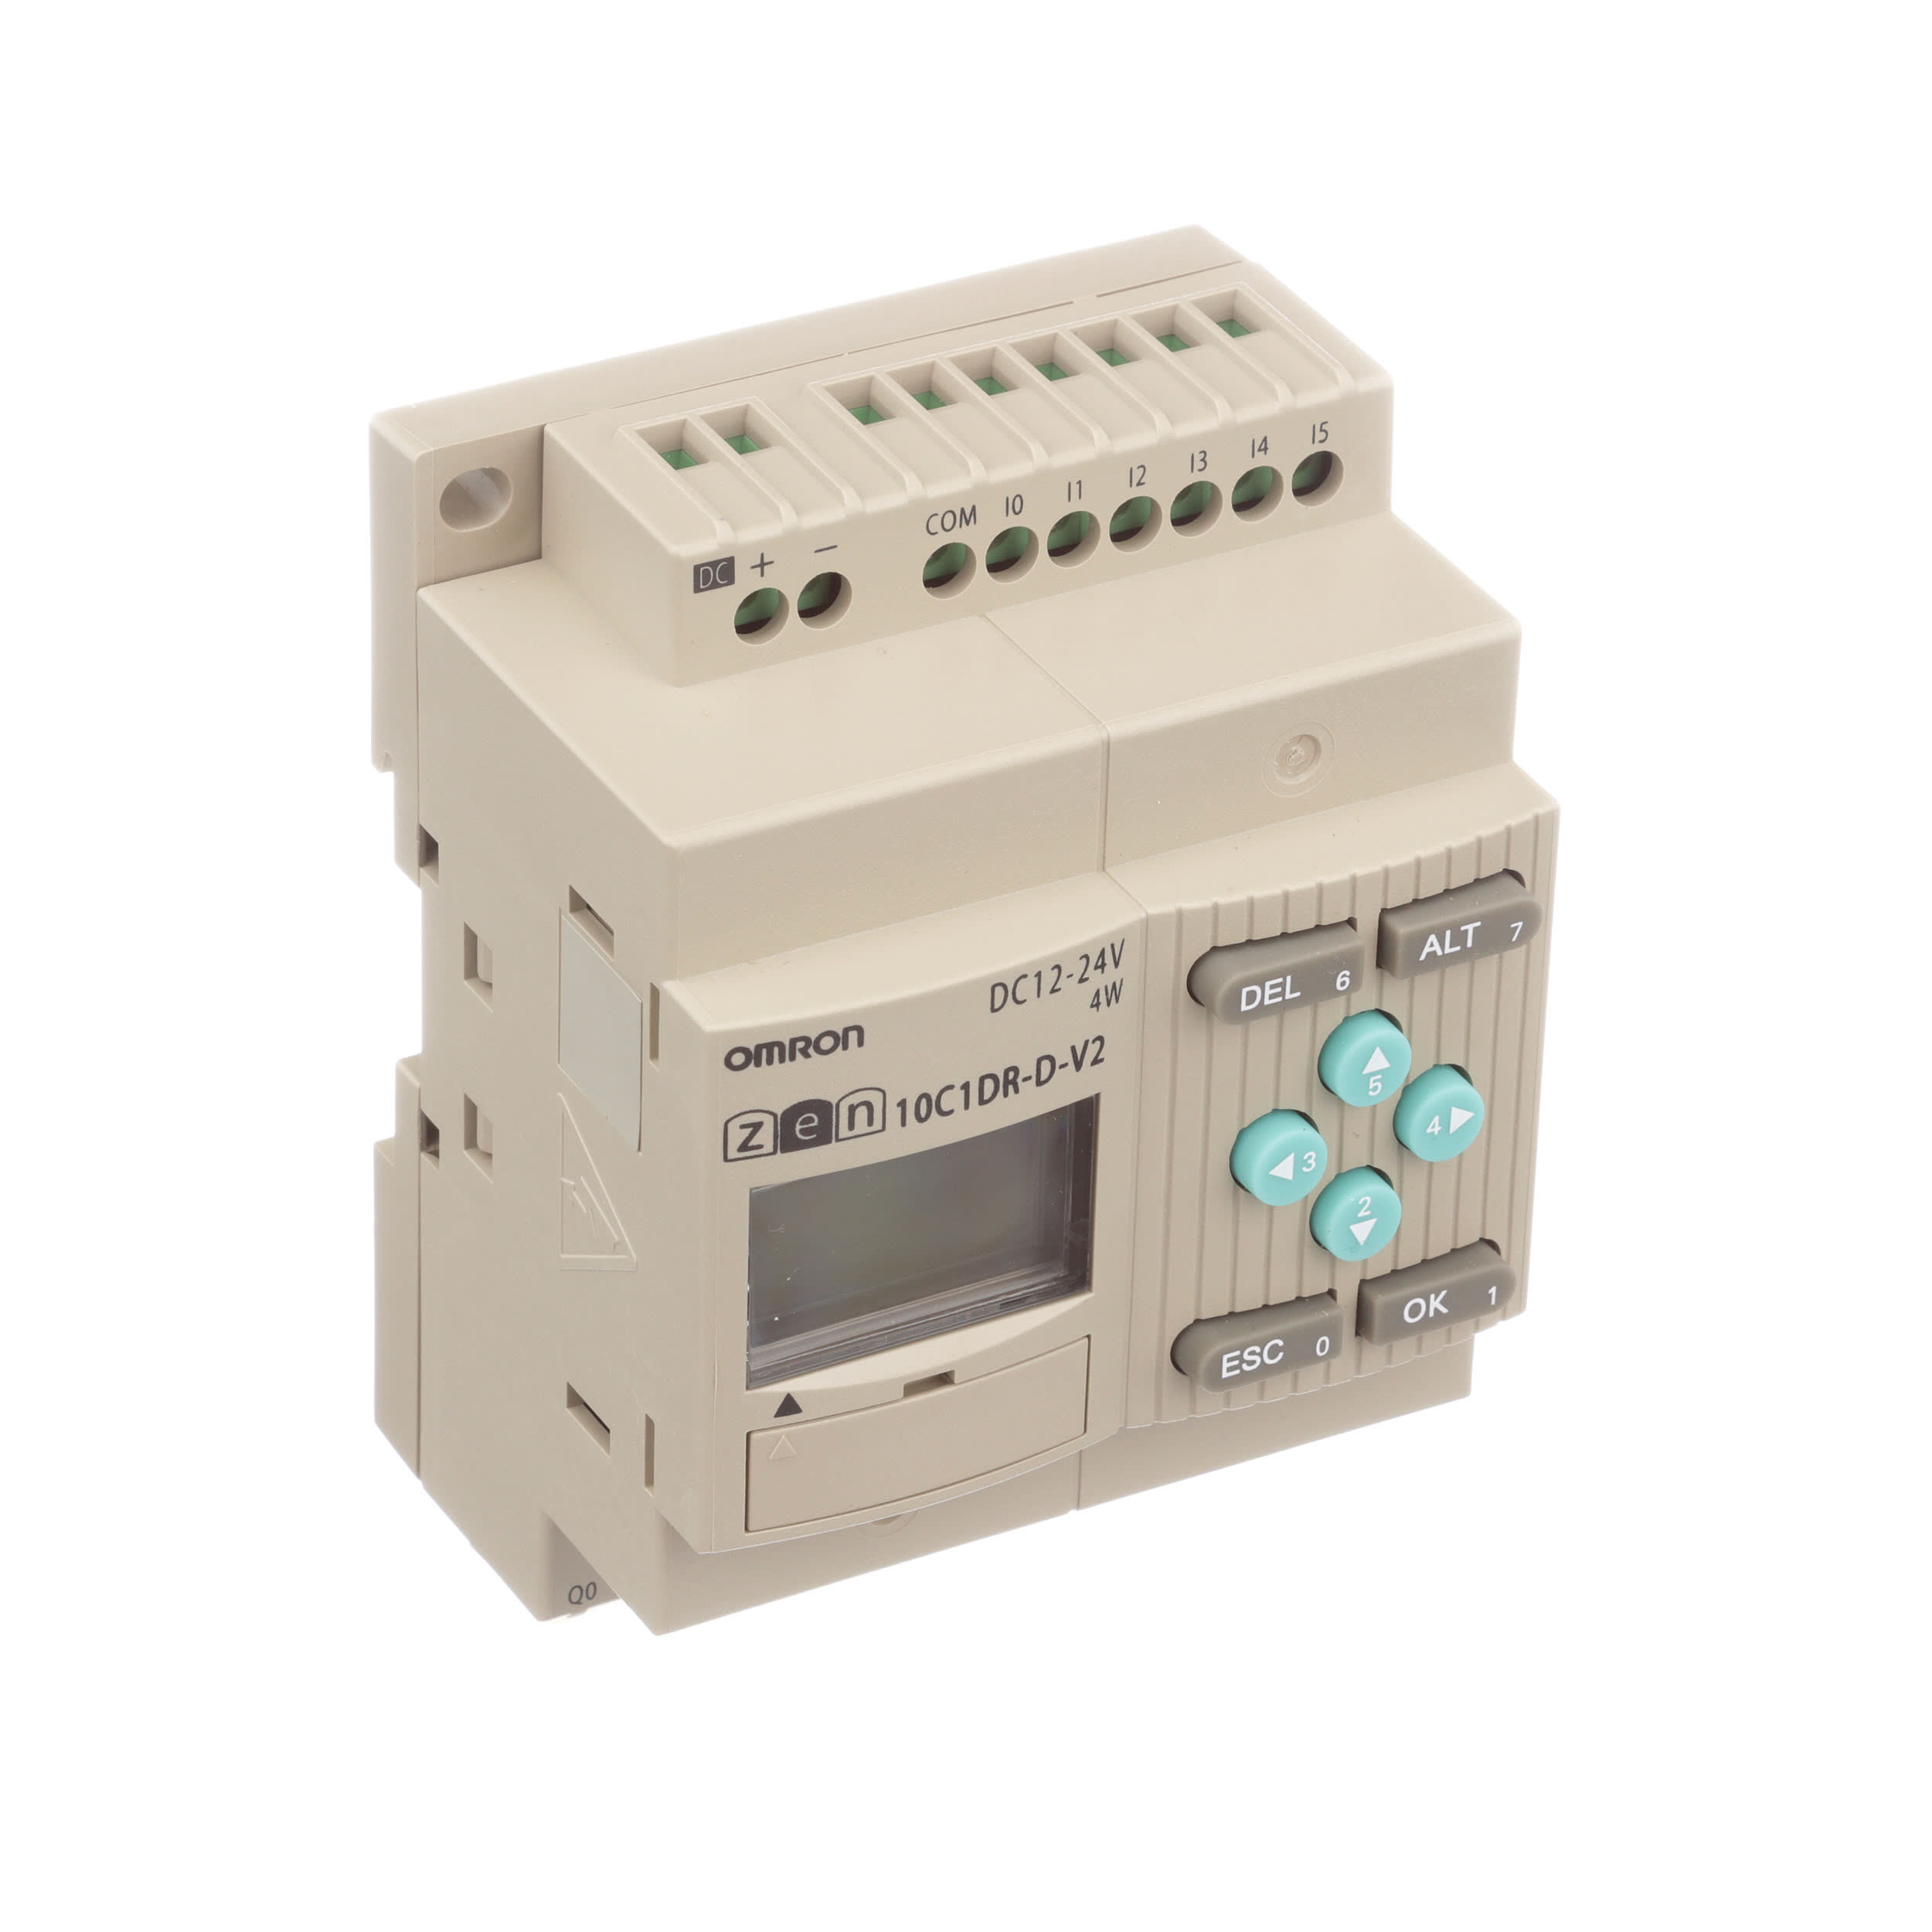 Details about   1PC Omron ZEN-10C1DR-D-V2 ZEN10C1DRDV2 Programmable Relay PLC New In Box